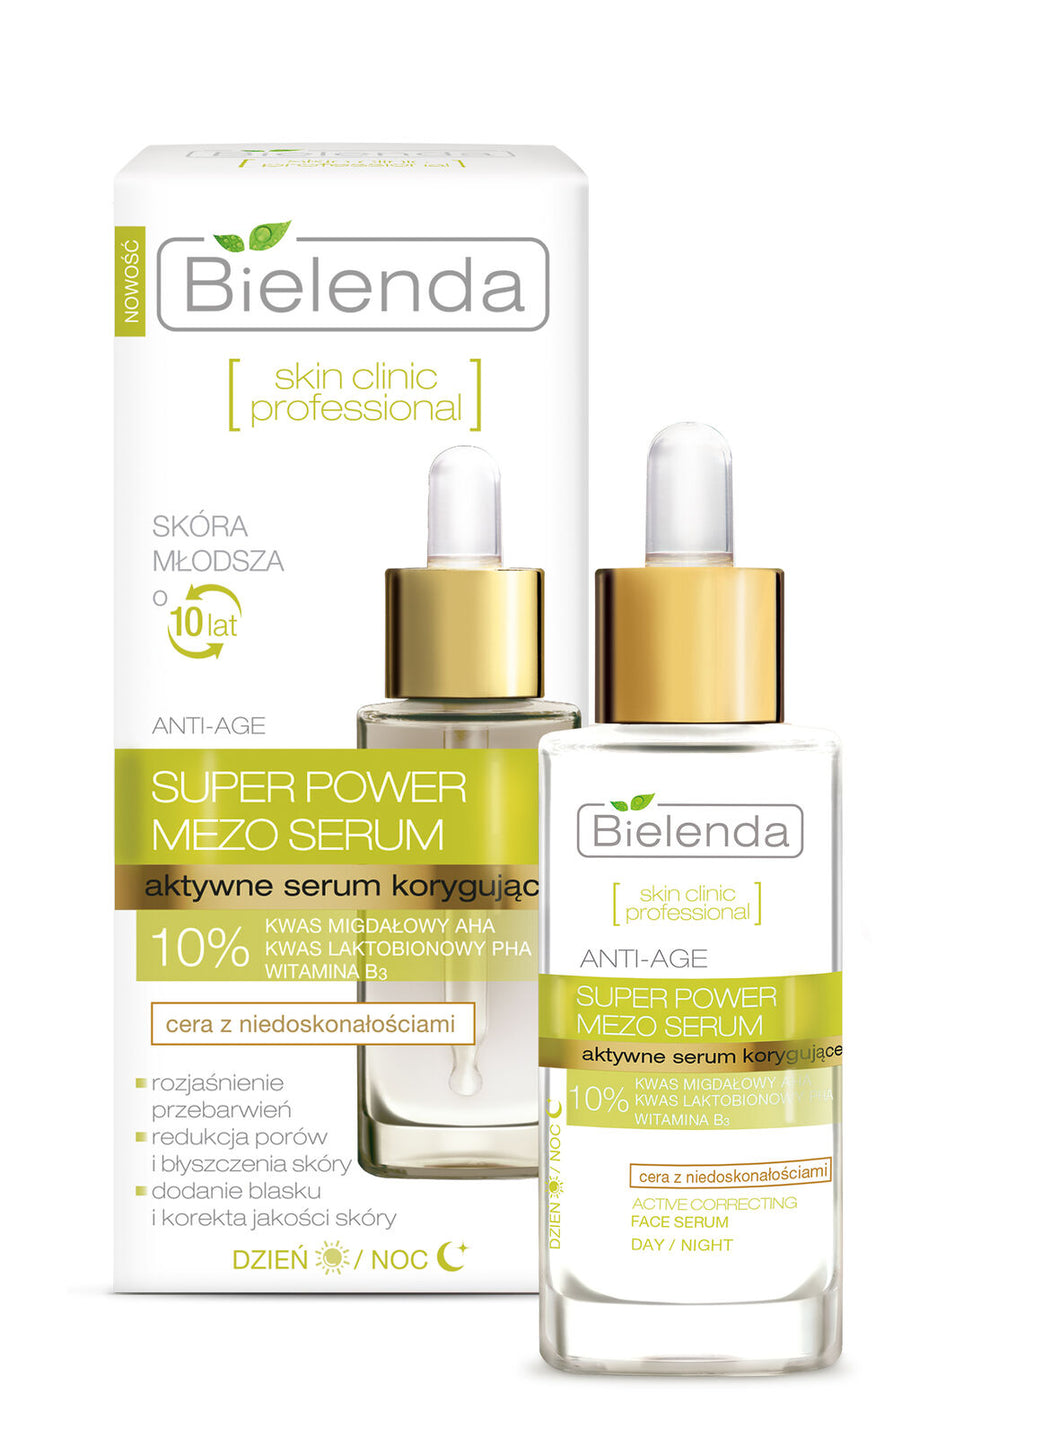 Bielenda Skin Clinic Professional Active Day and Night Correction Serum 30ml